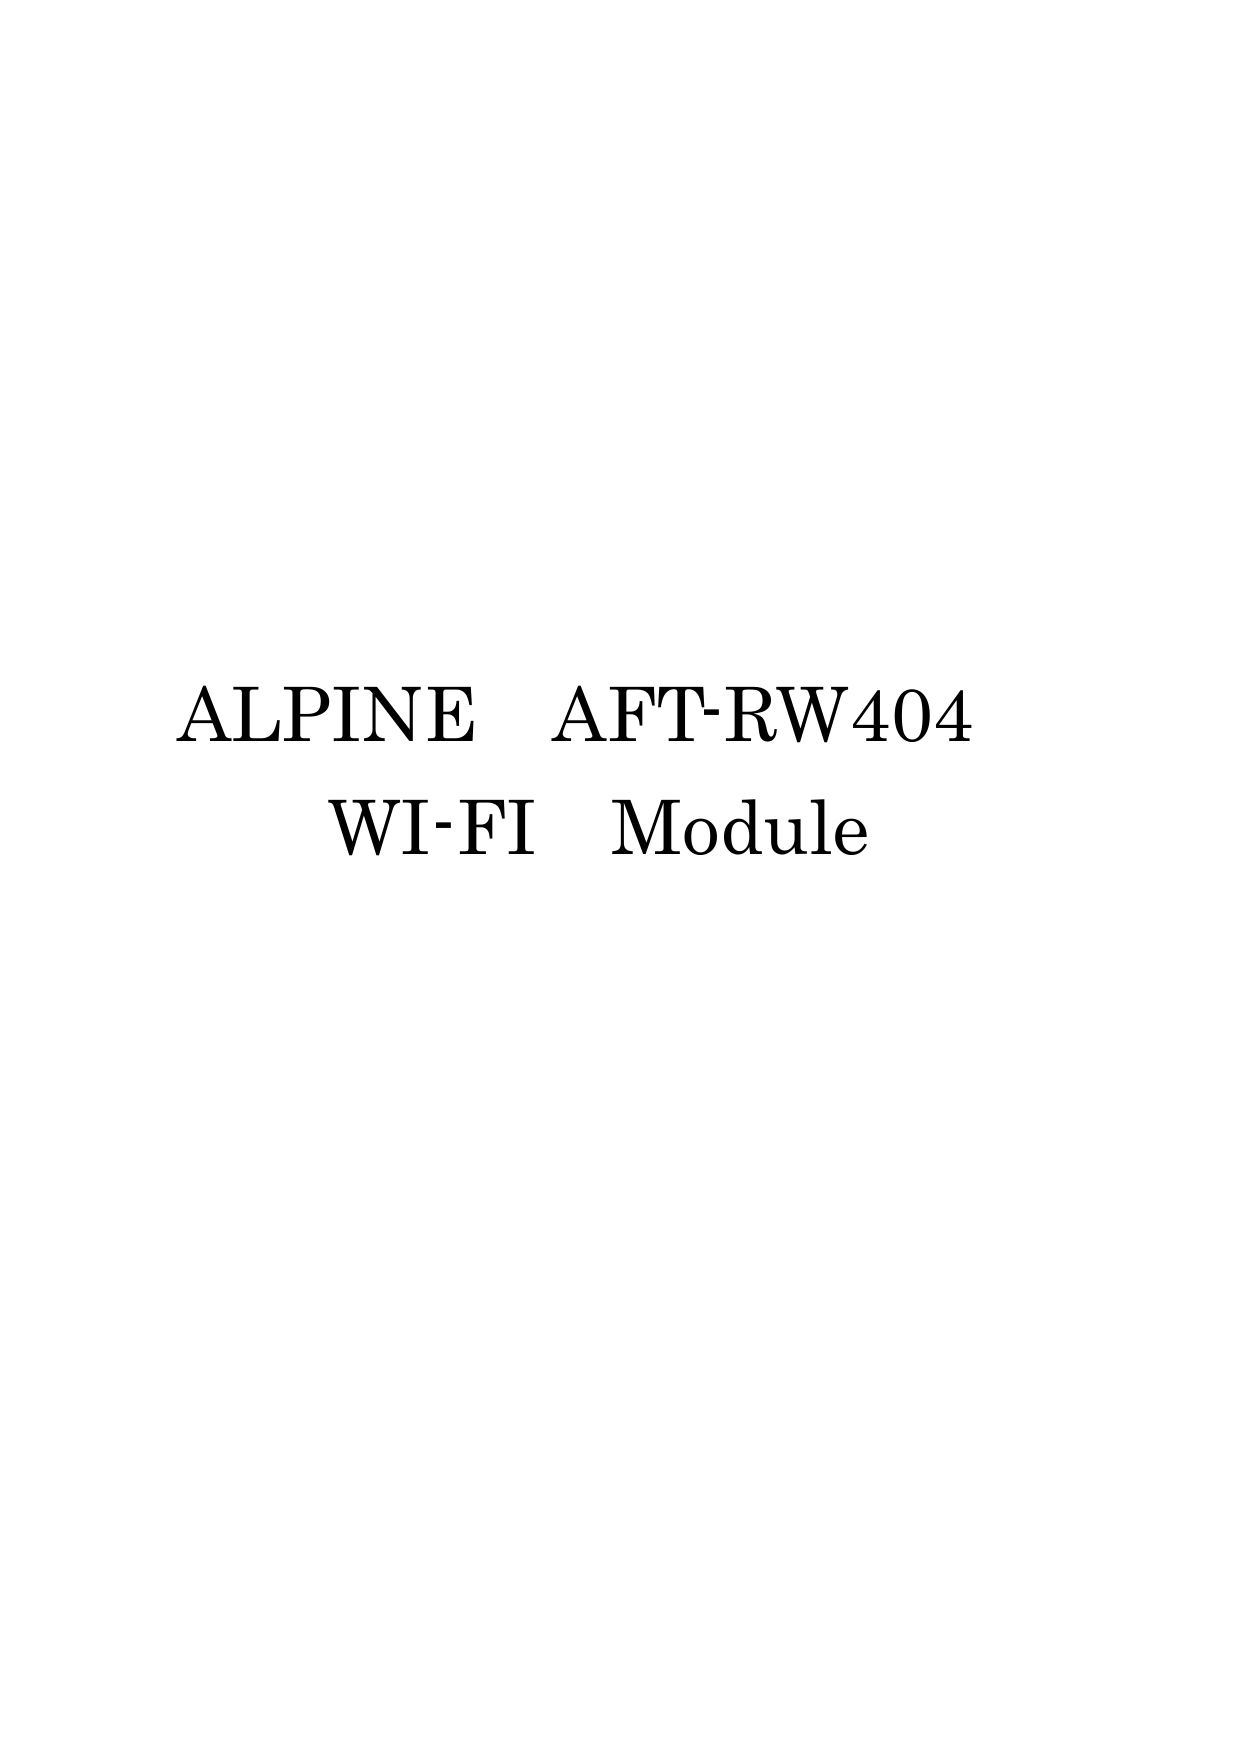     ALPINE AFT-RW404   WI-FI Module   